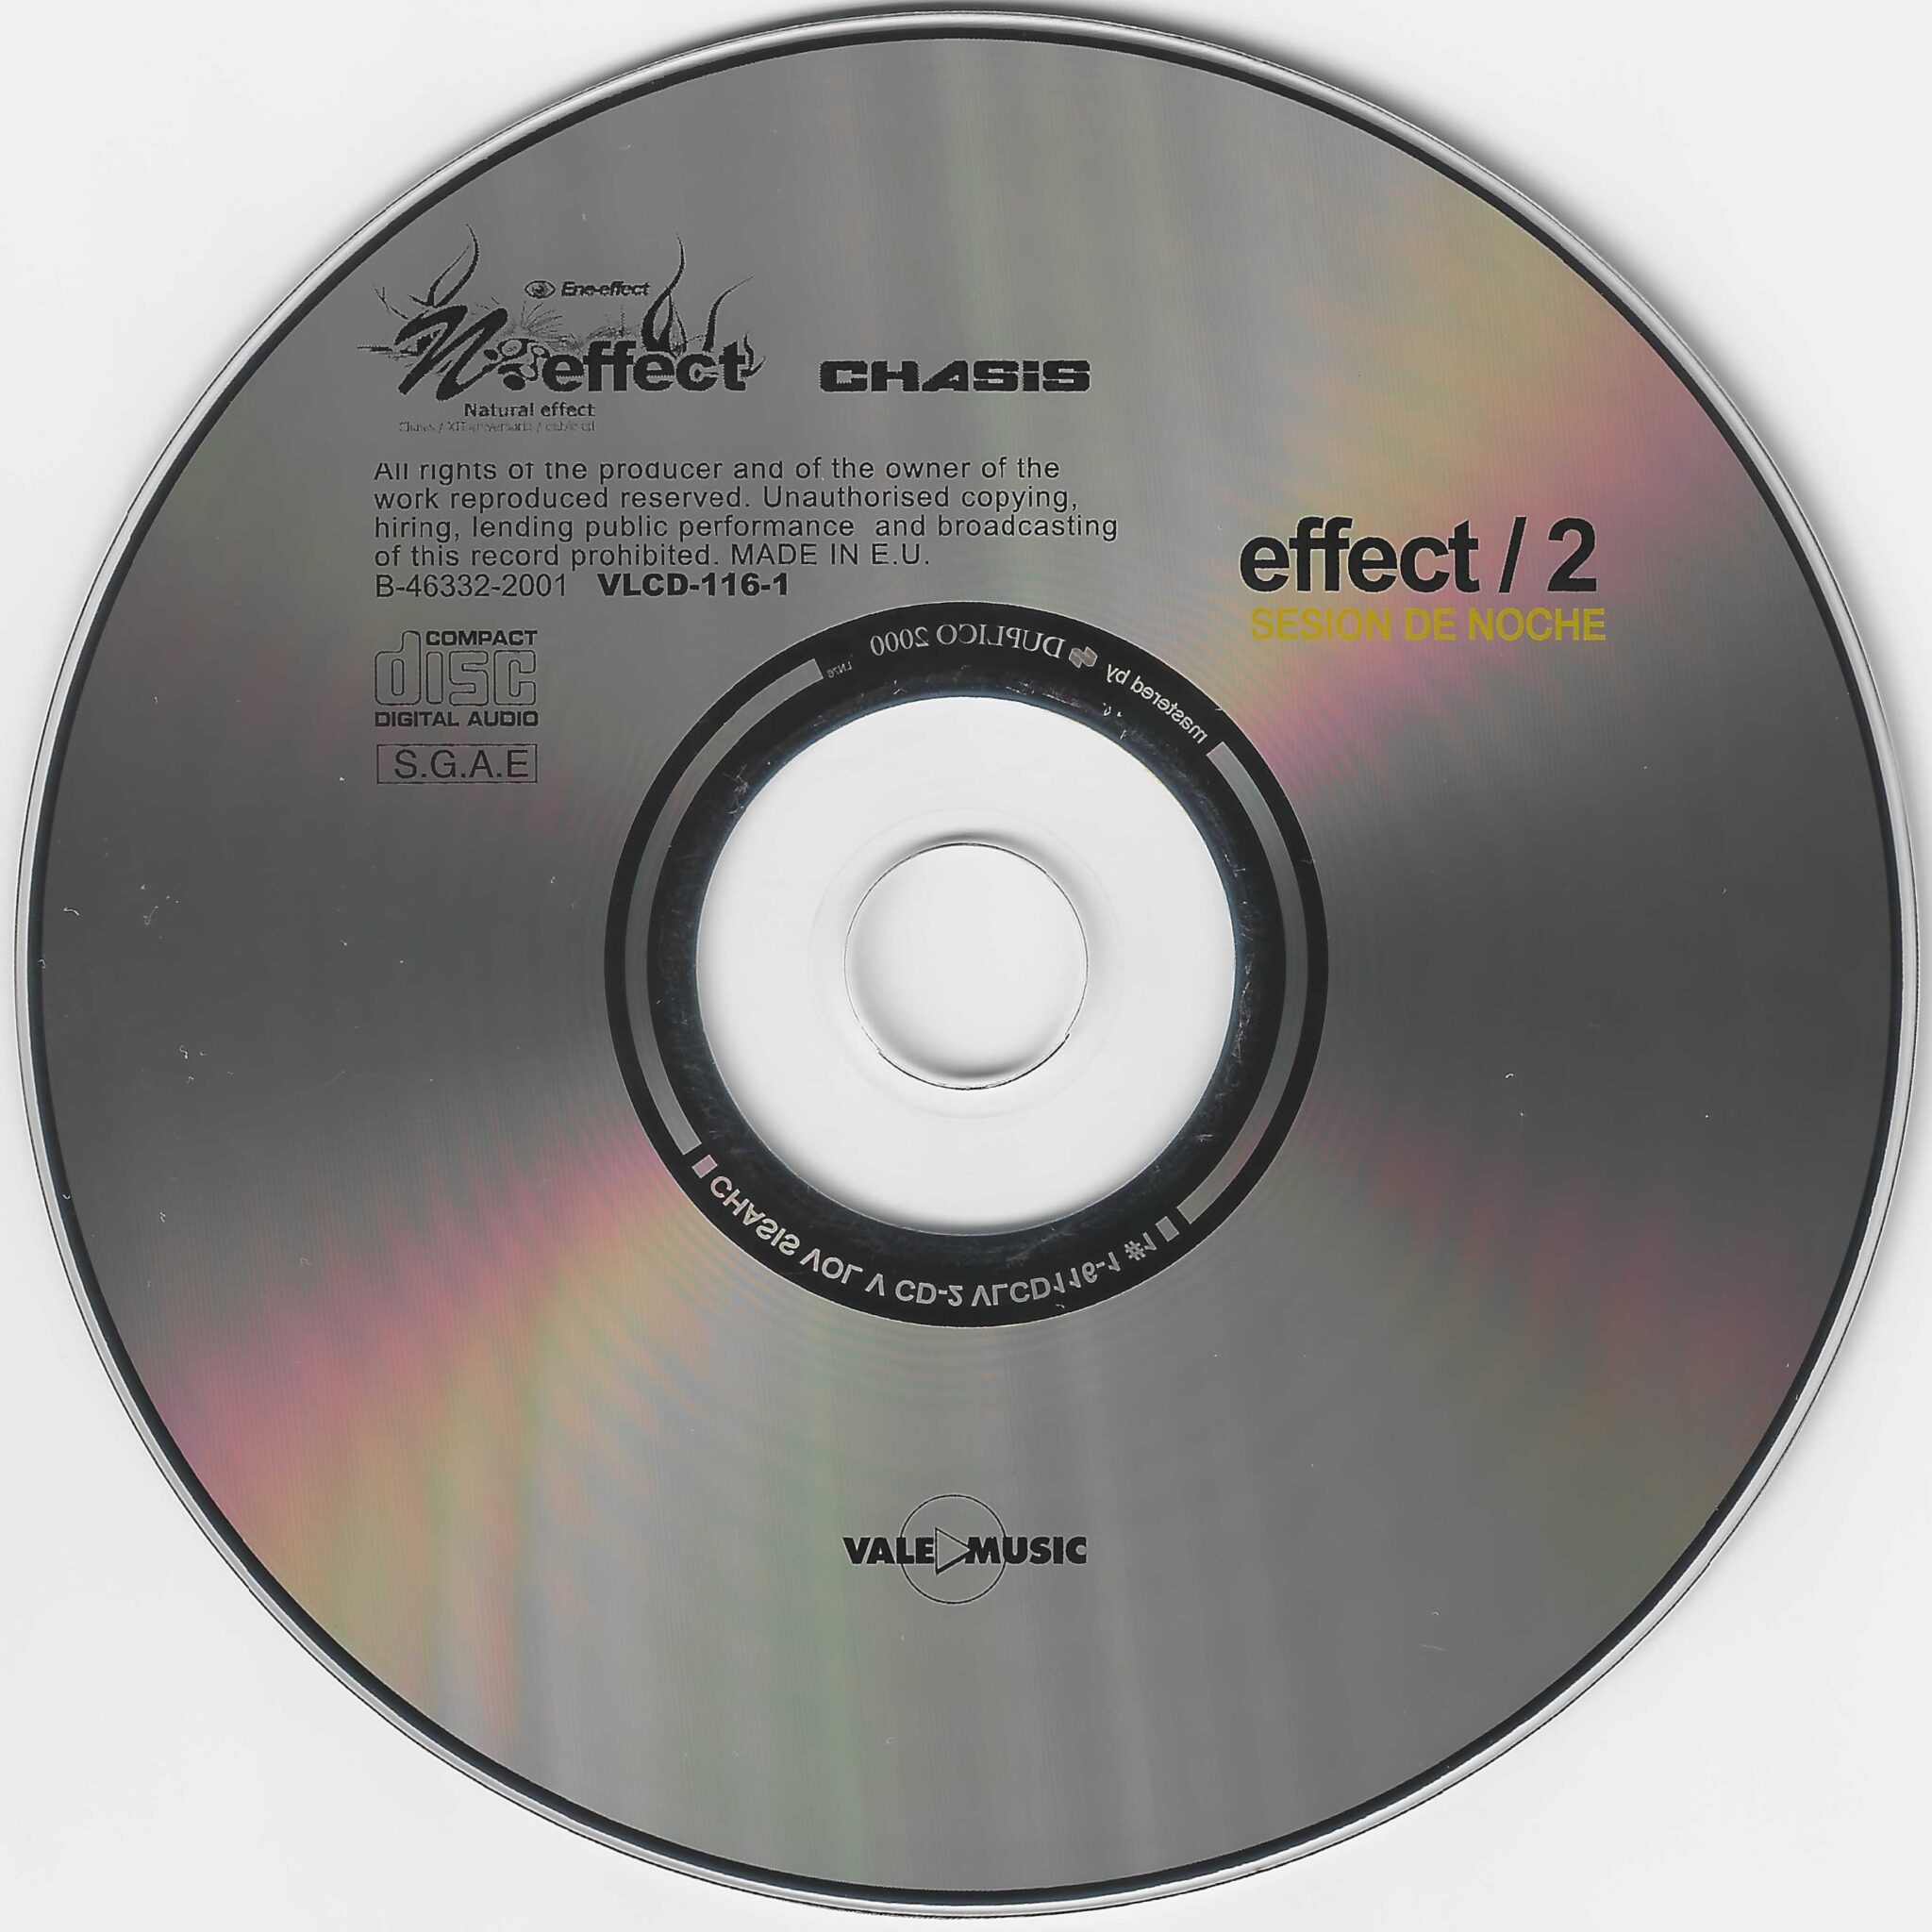 Chasis - Natural Effect - 2 CD's - 2001 - Vale Music - ellodance